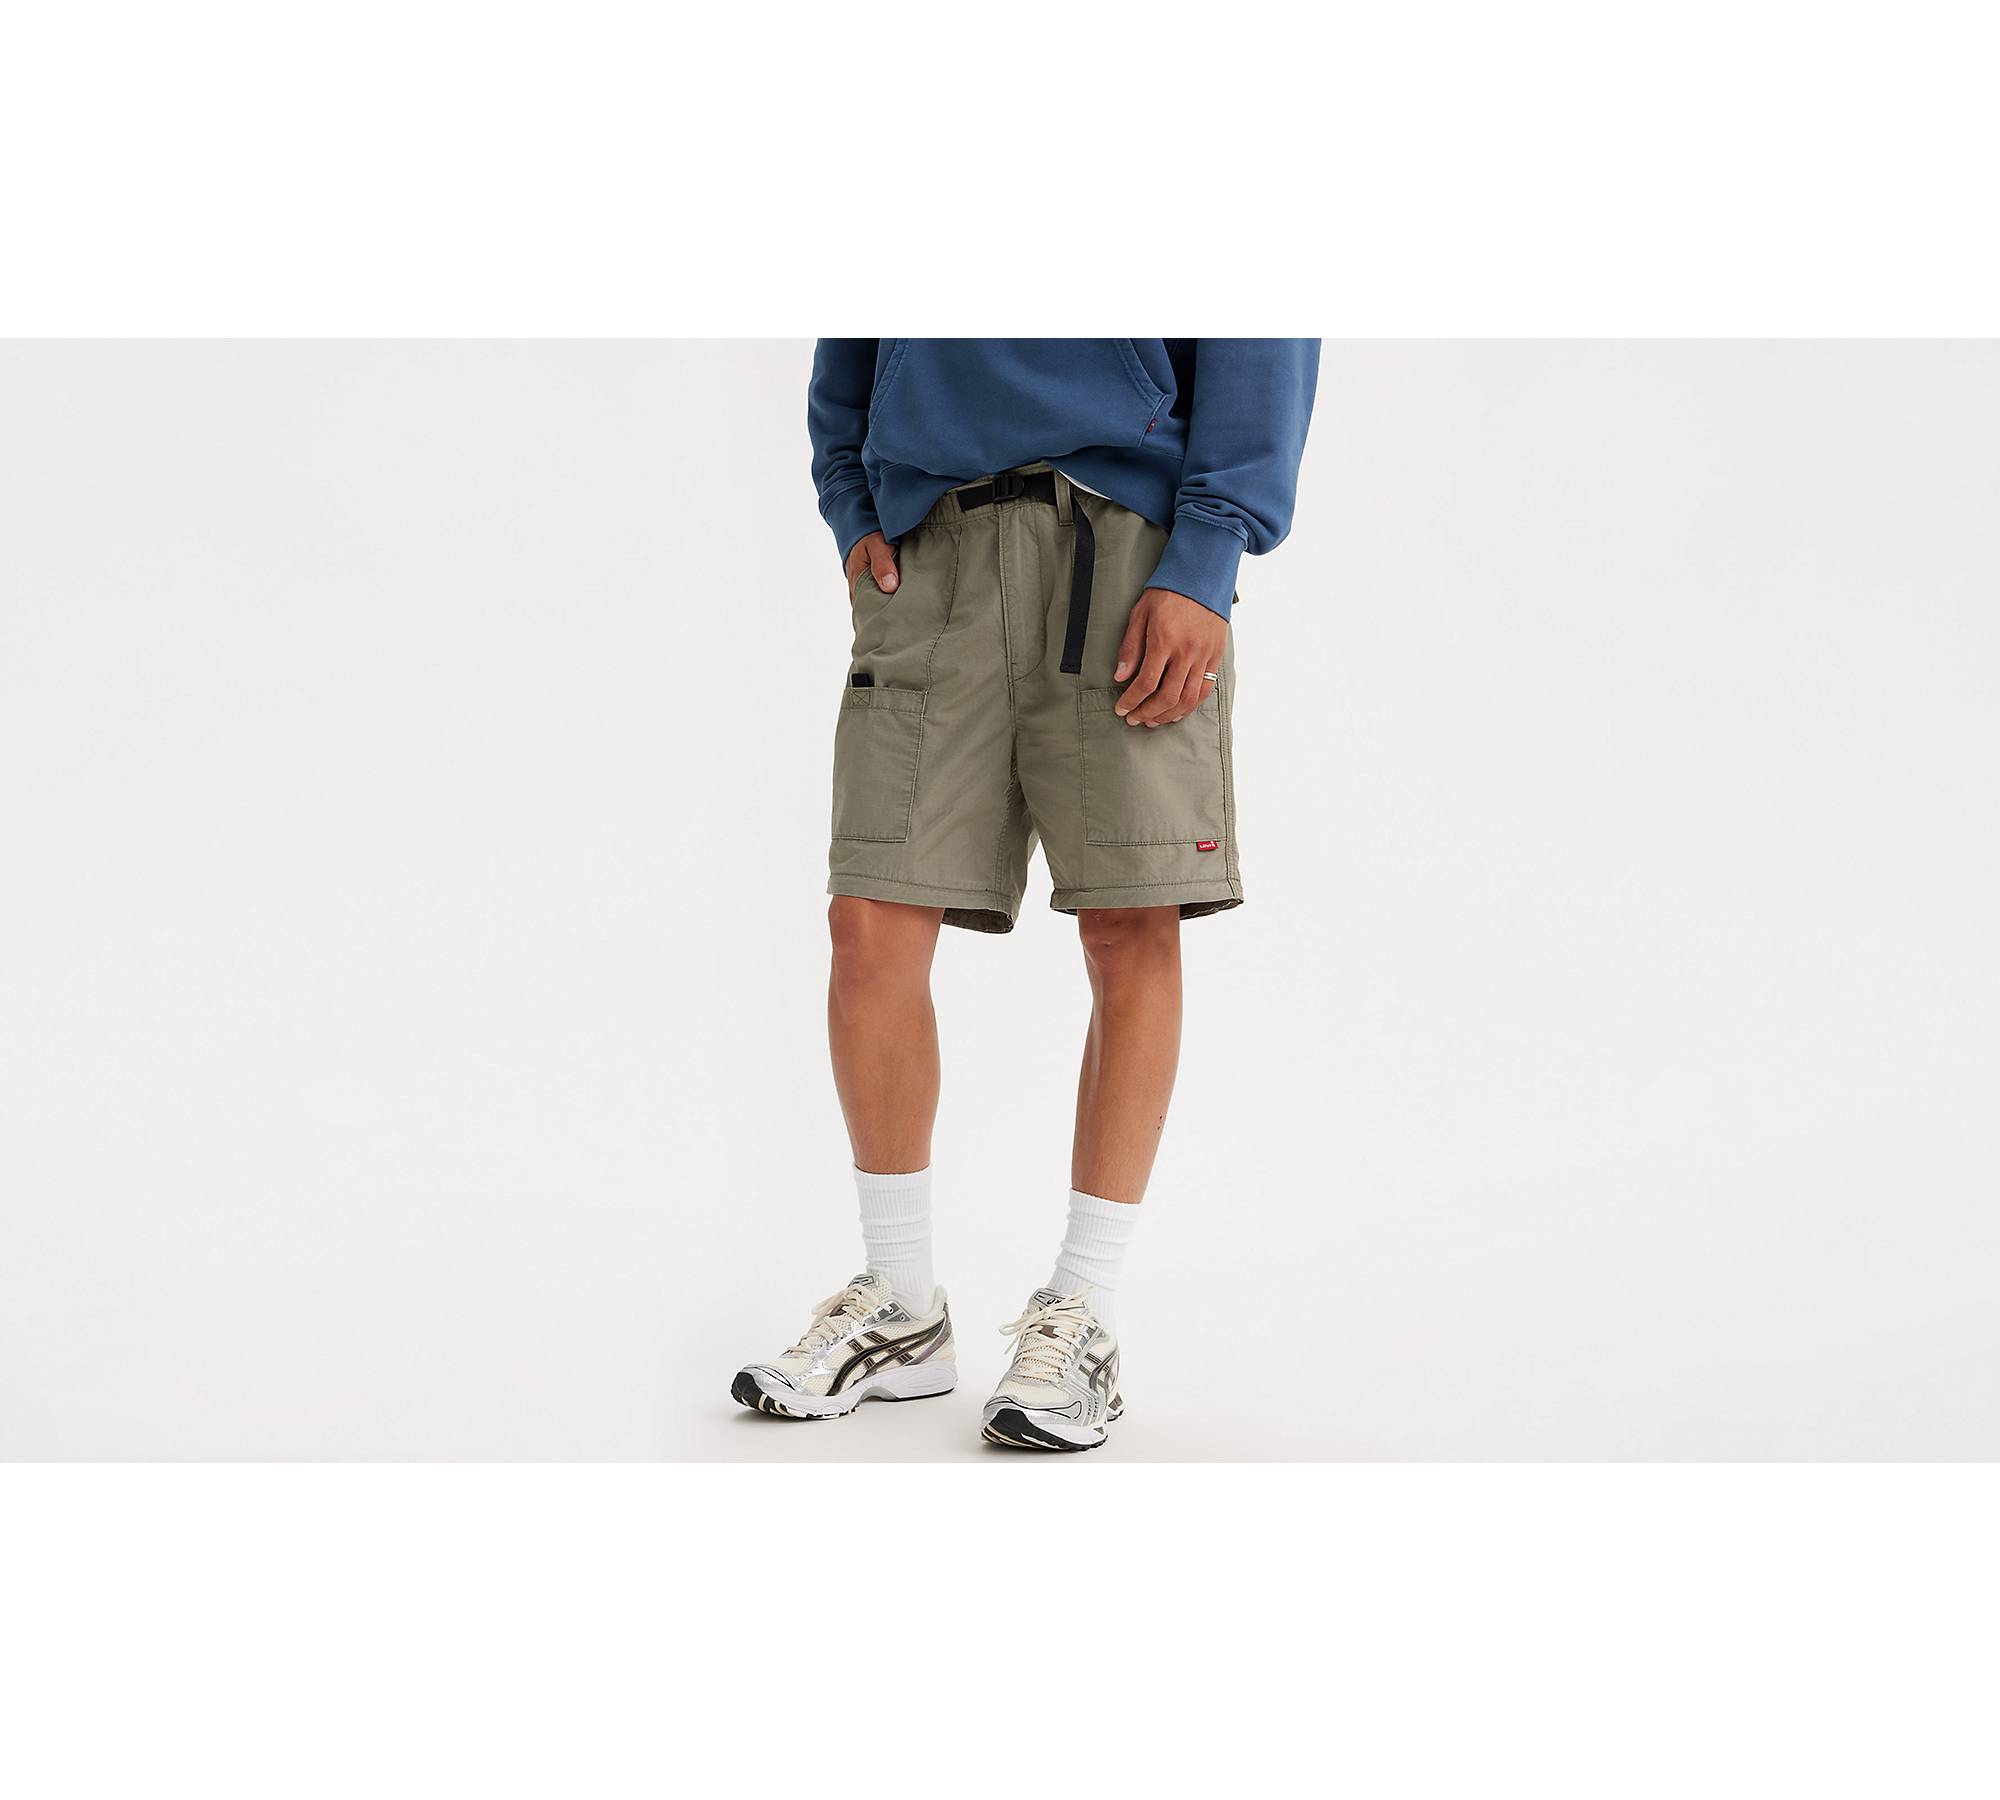 Utility Zip-Off Pants - Levi's Jeans, Jackets & Clothing